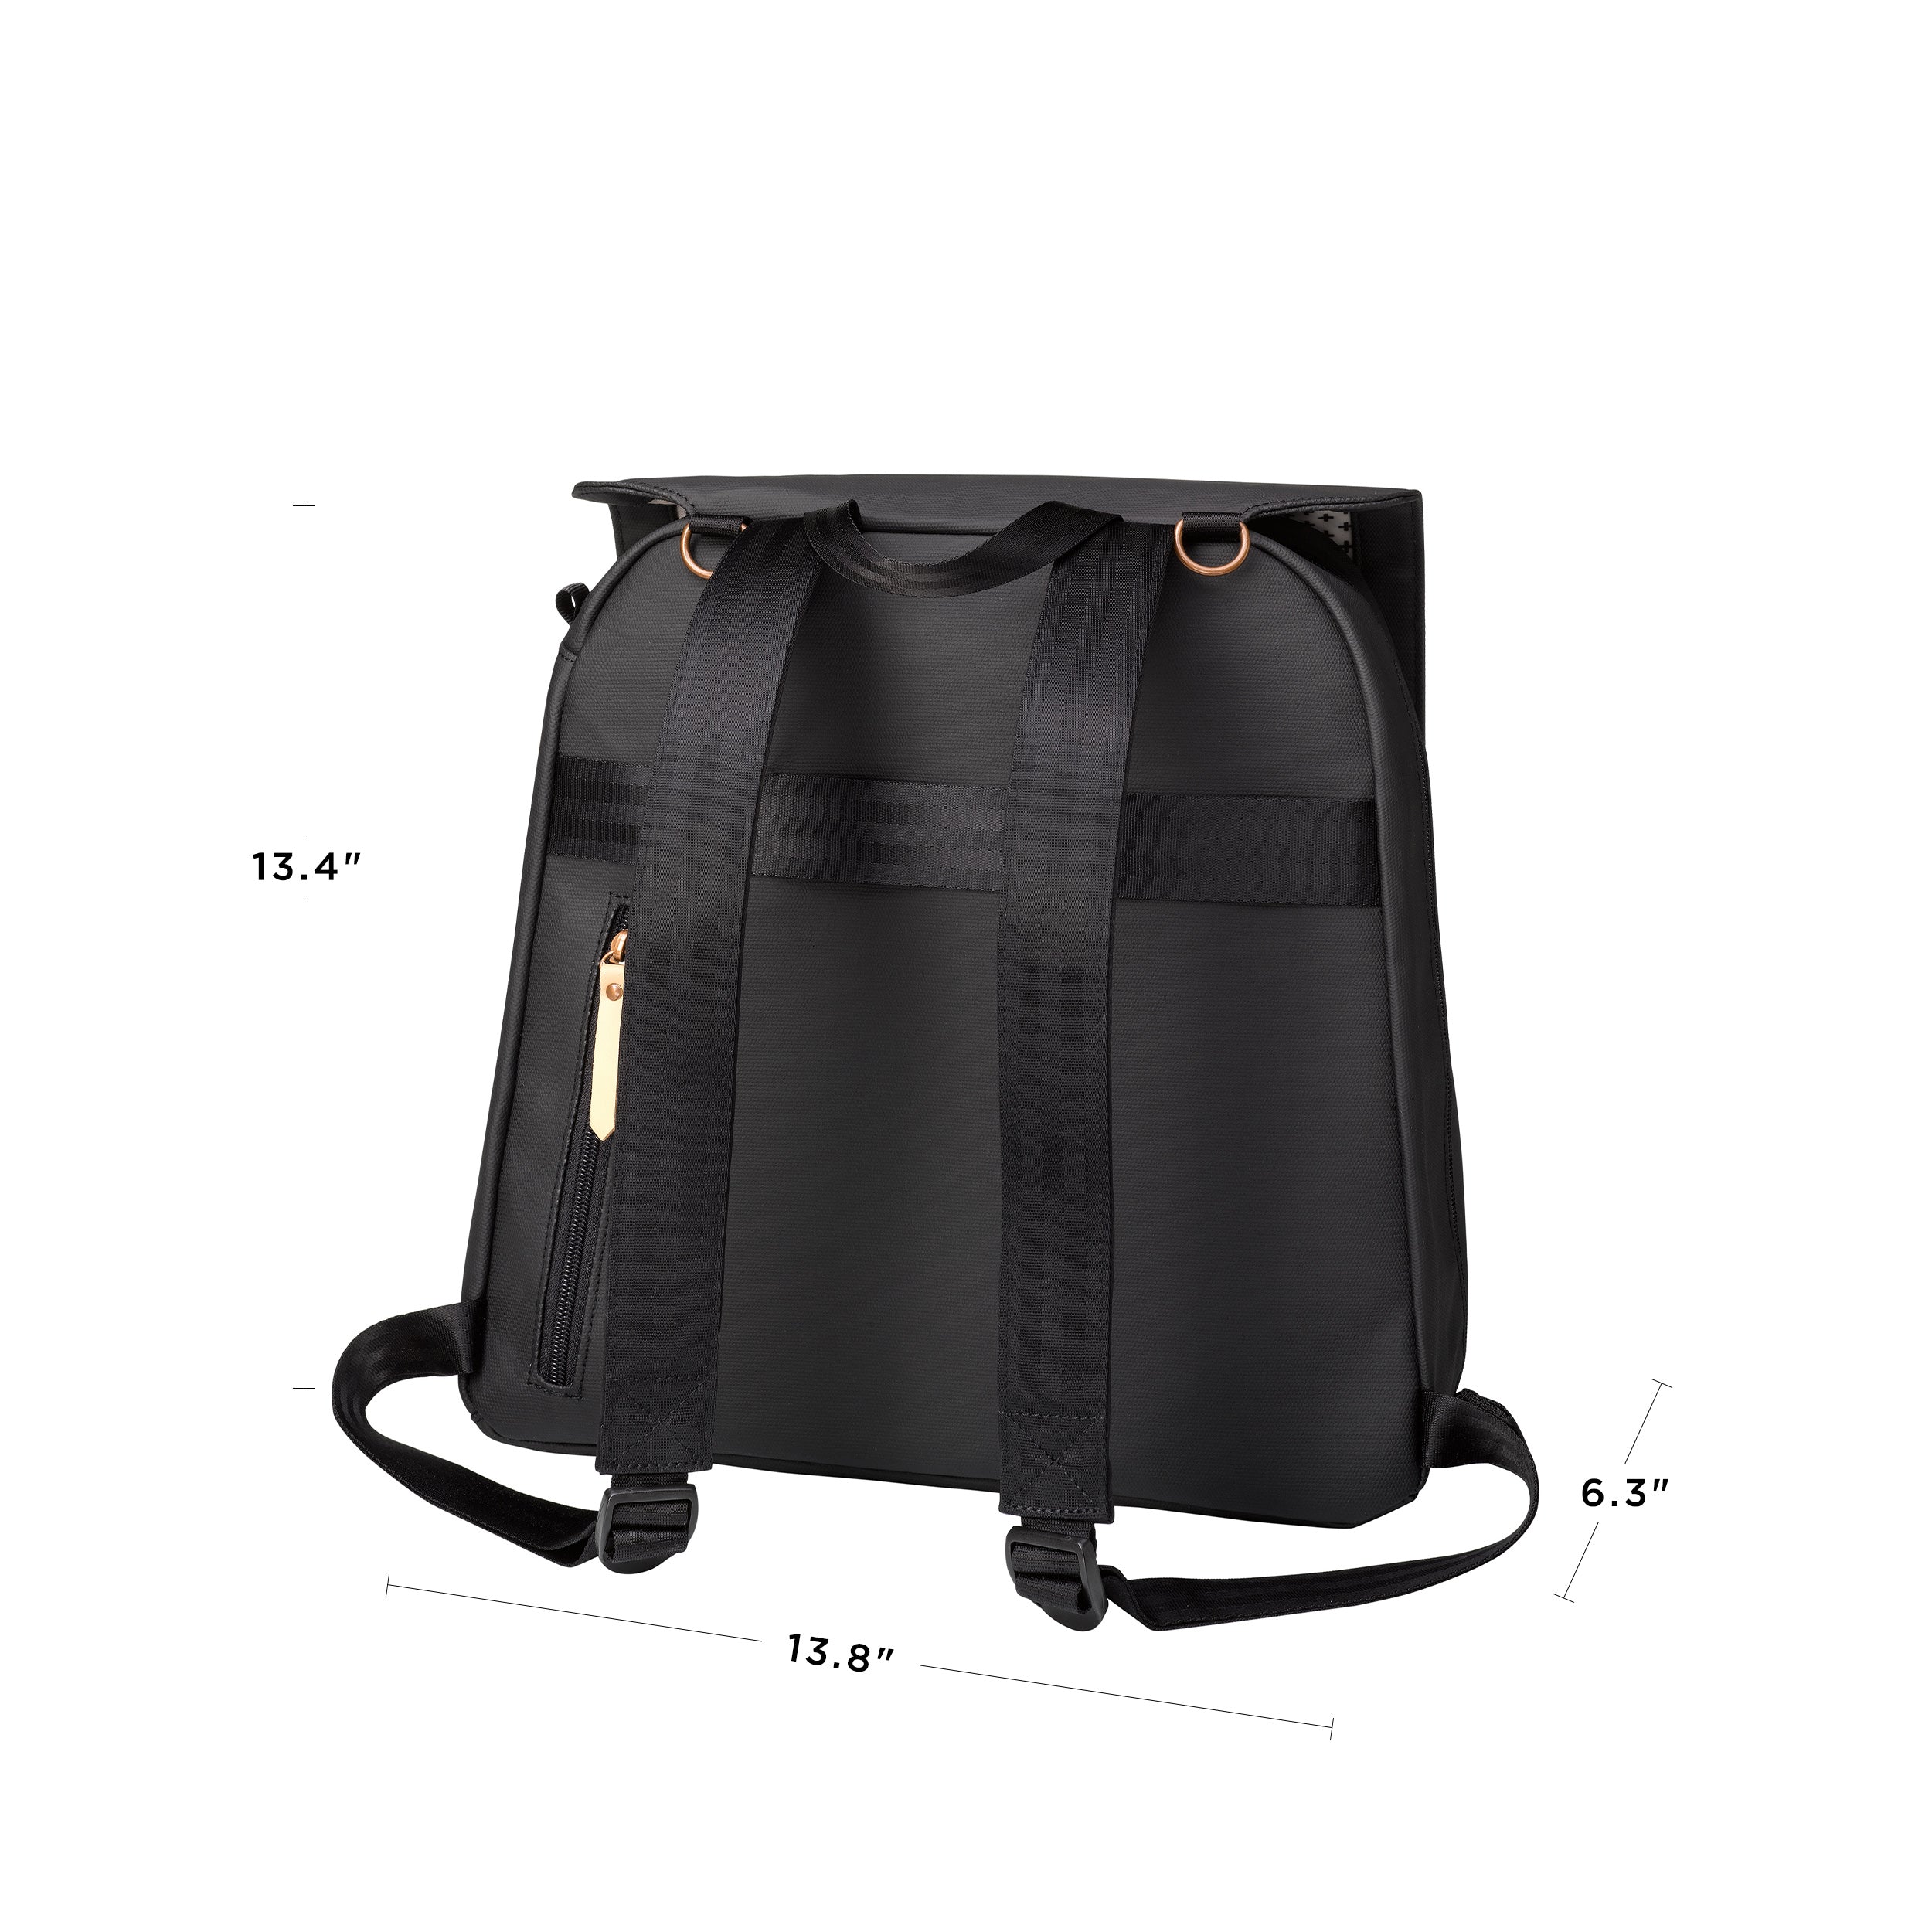 Petunia Pickle Bottom Meta Backpack in Graphite/Black